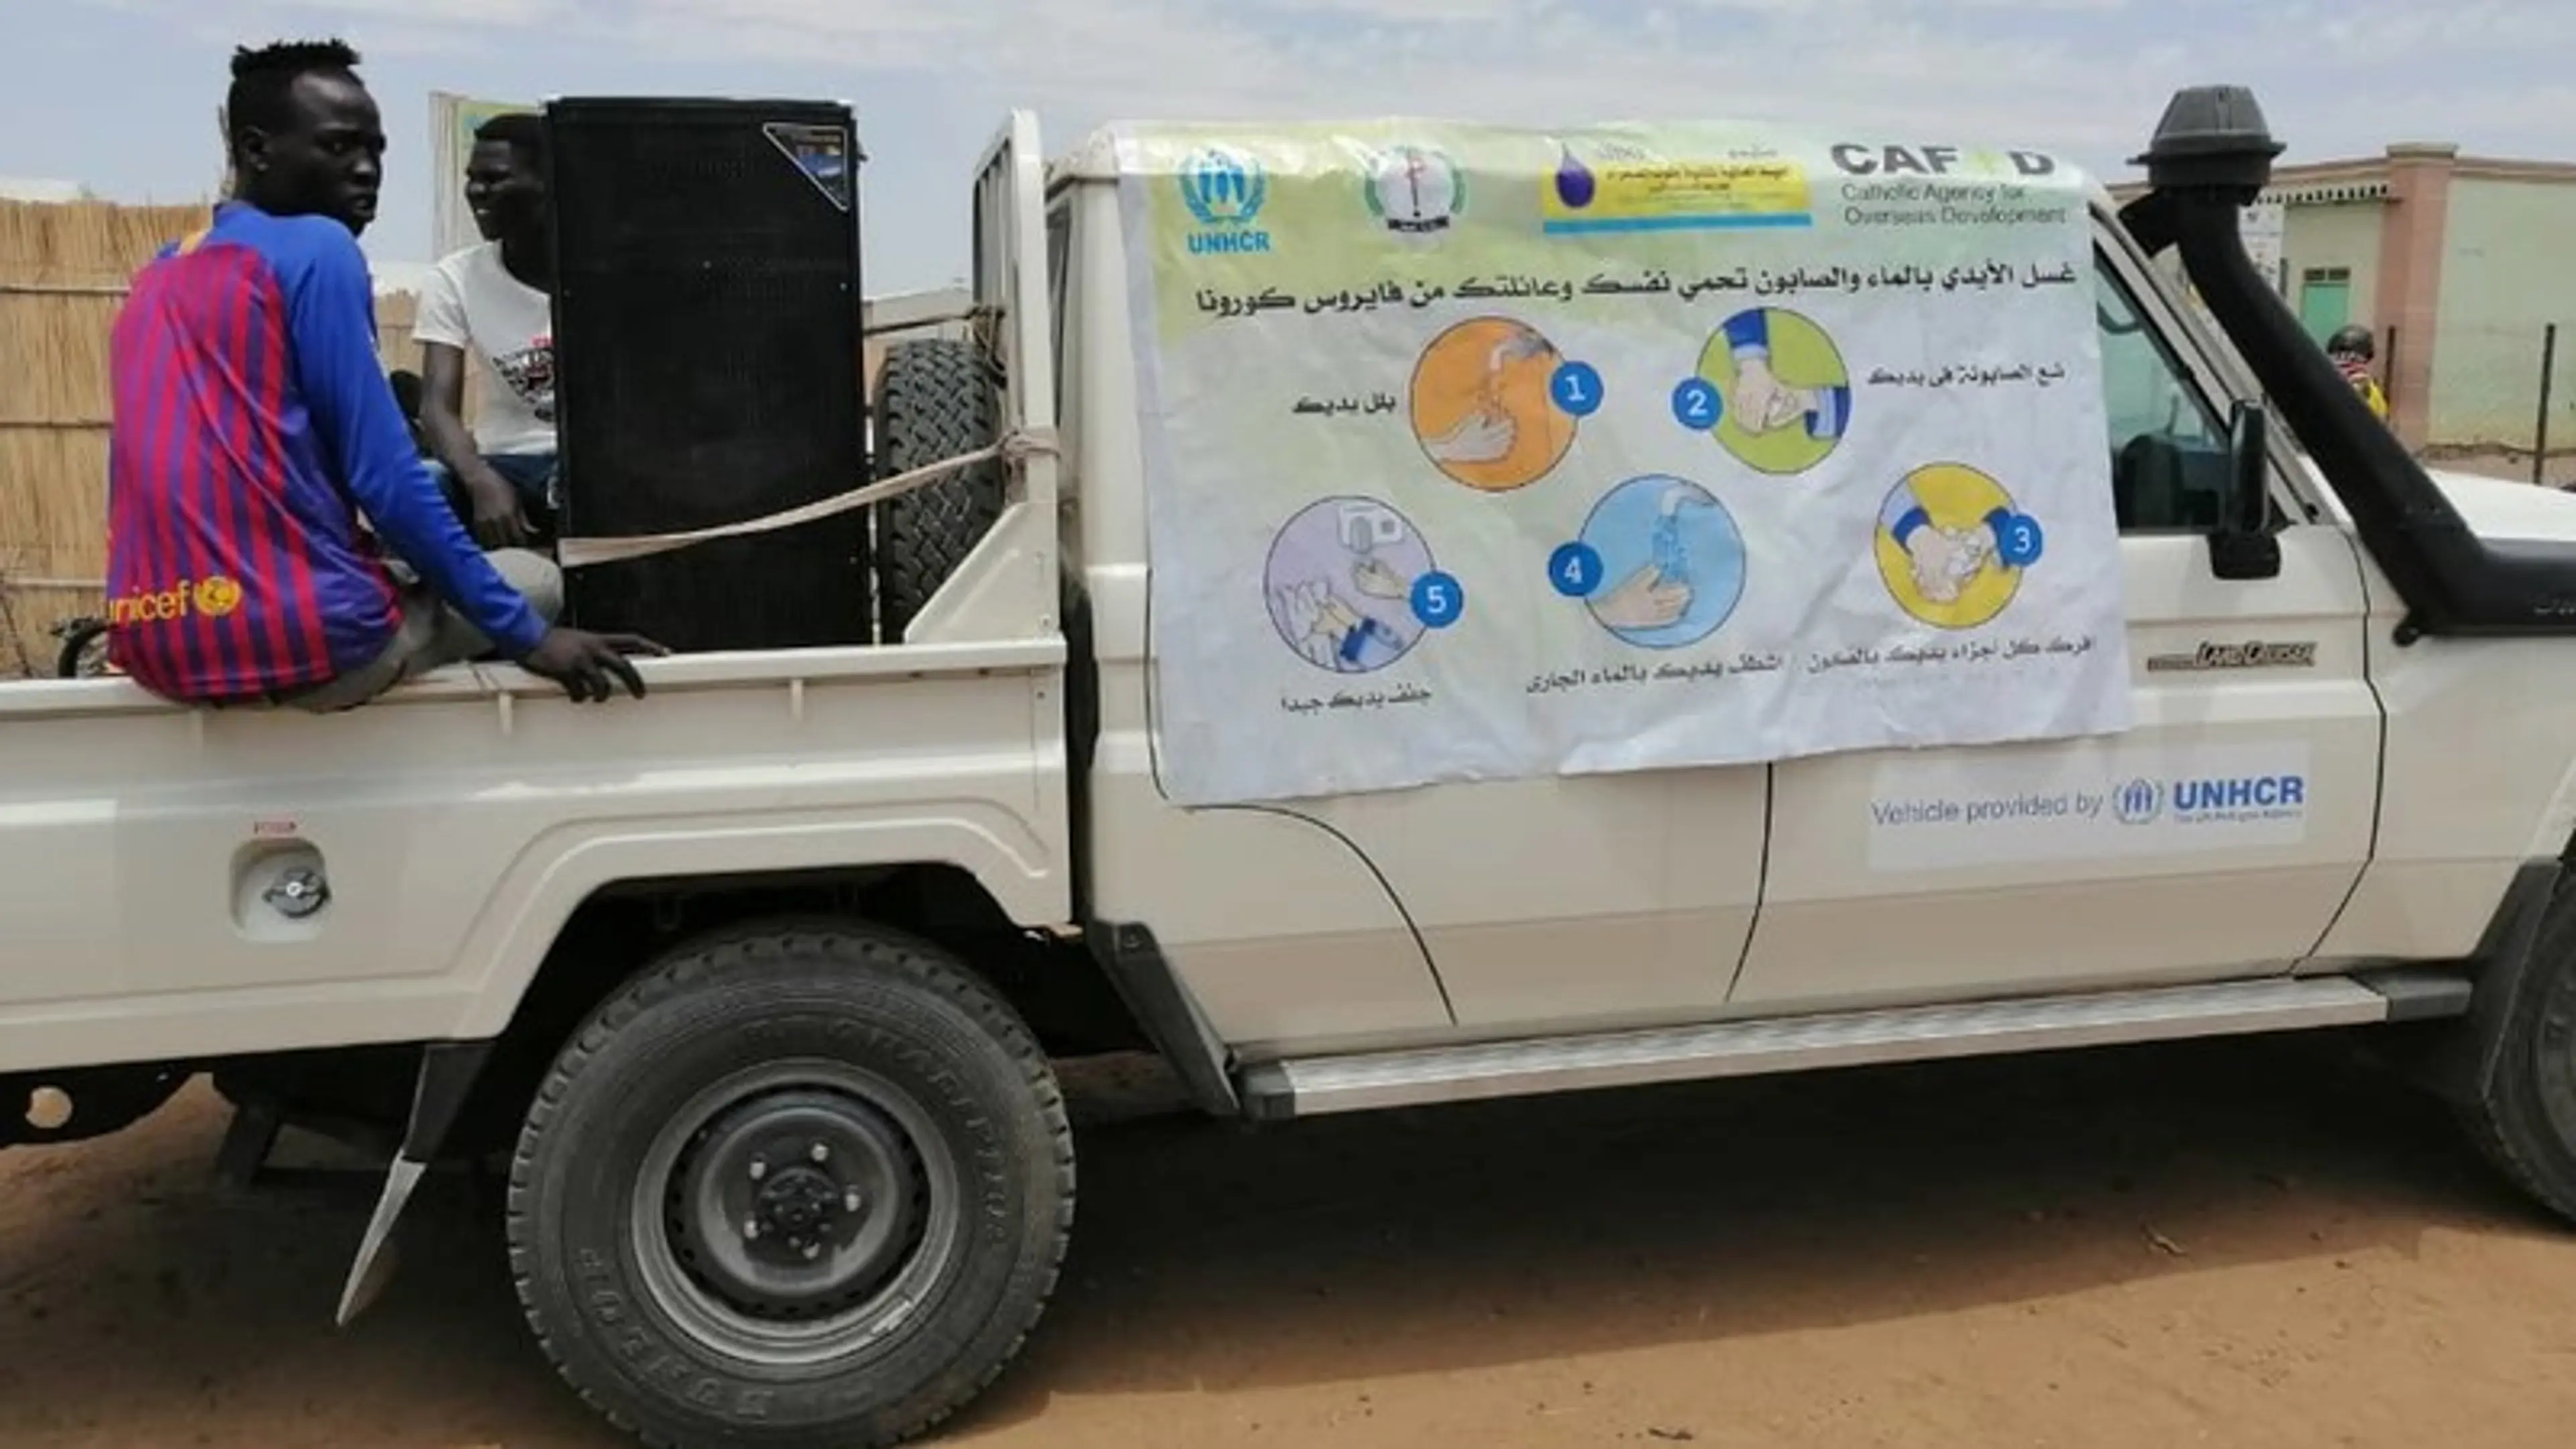 Africa - Sudan - coronavirus covid prevention information on side of truck